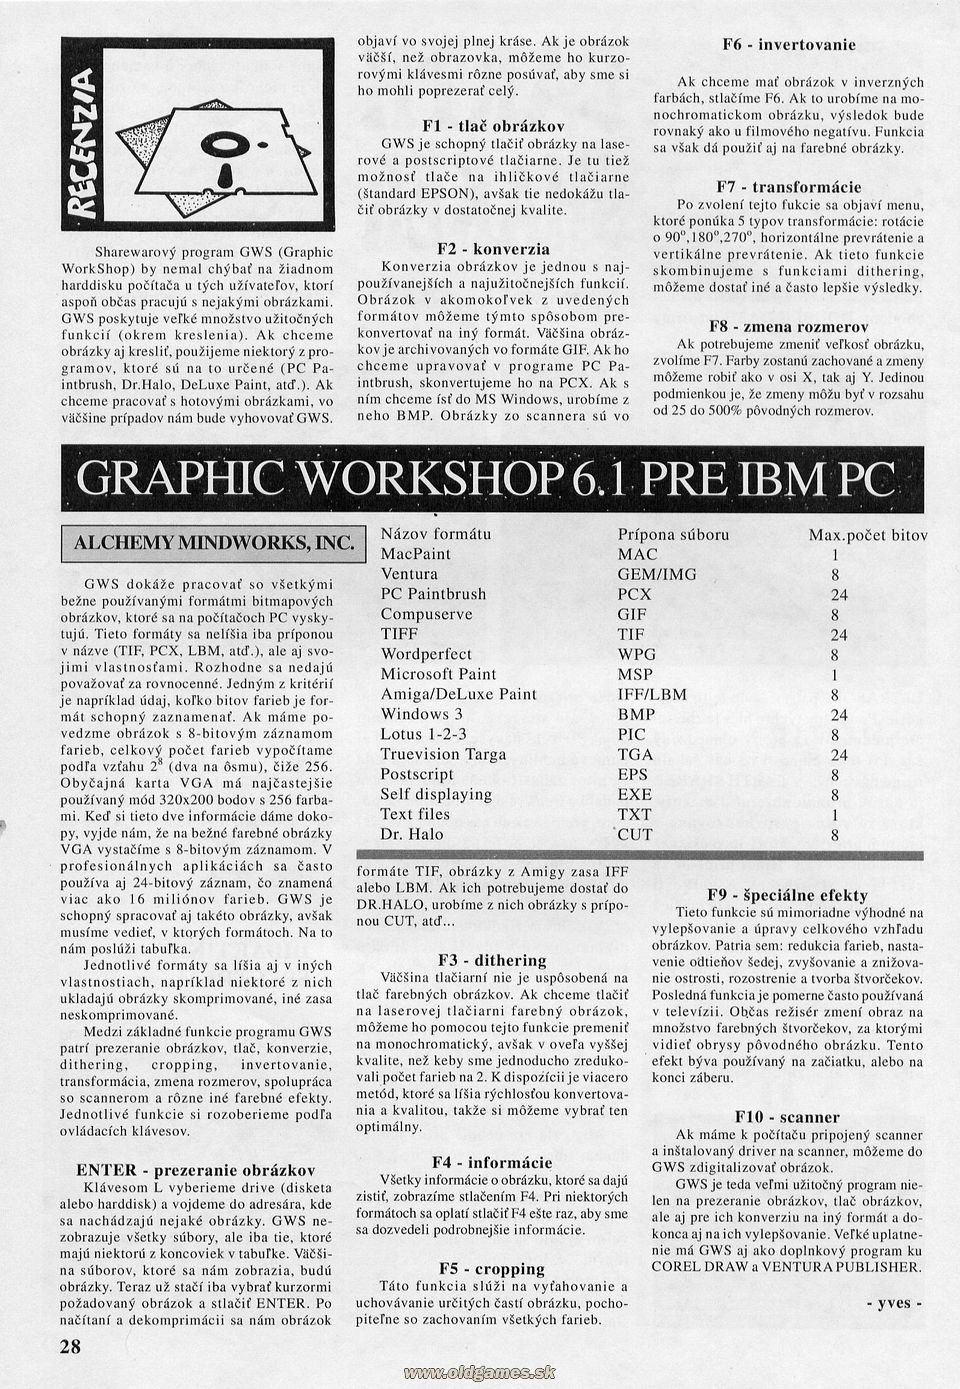 Graphic Workshop 6.1 pre IBM PC